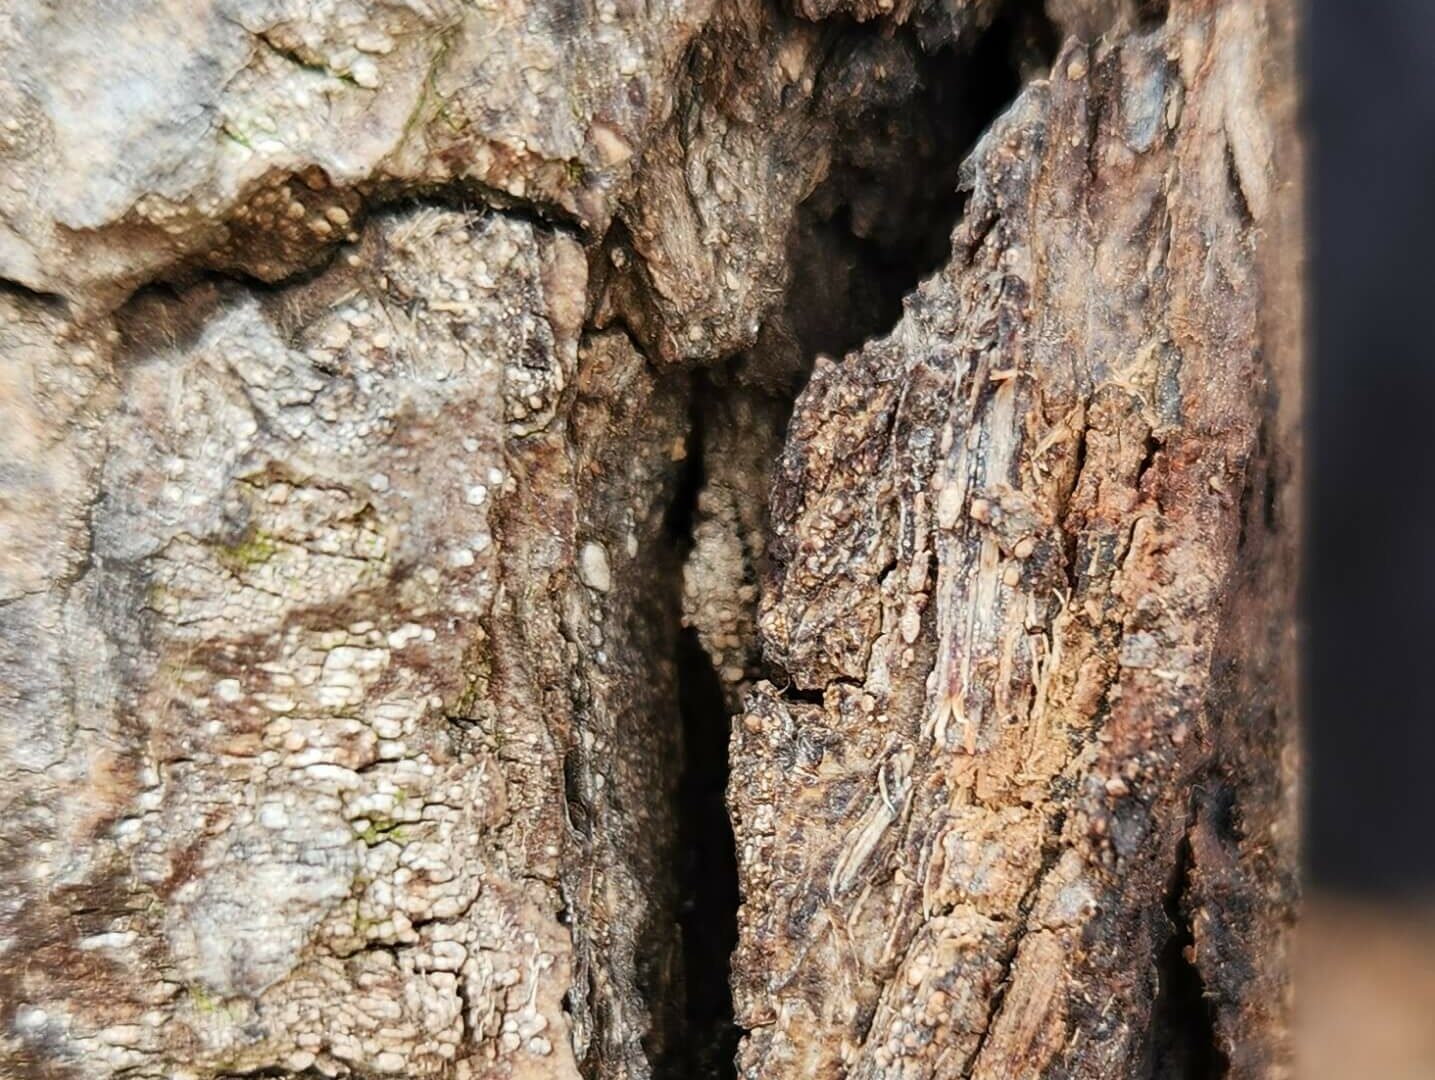 Image of a dark crack in the bark of an oak tree, which is a symptom of acute oak decline.